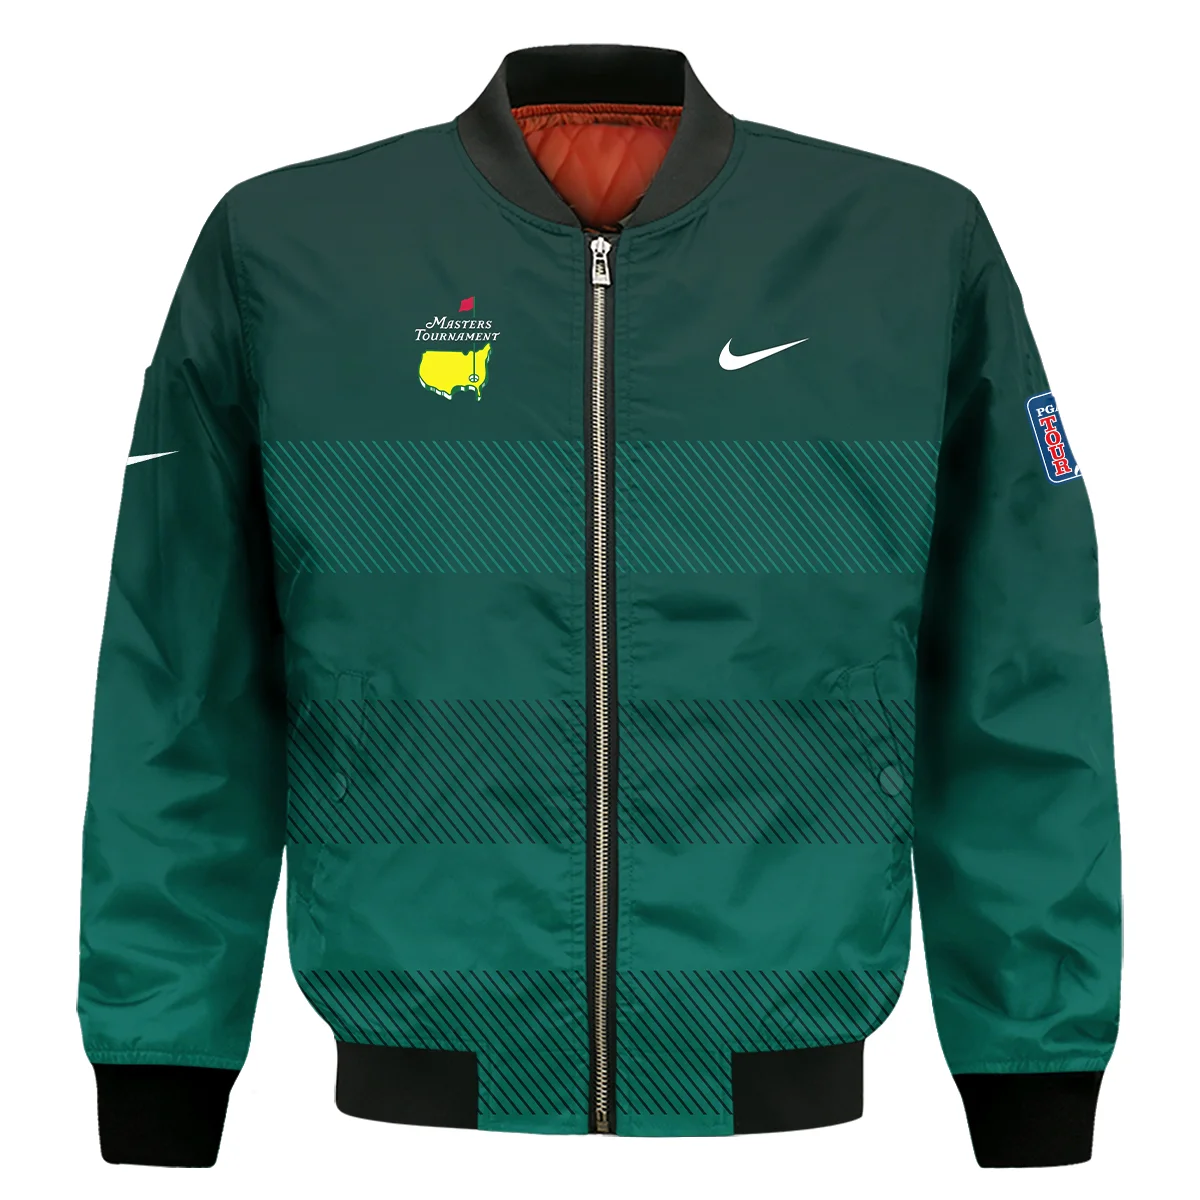 Nike Masters Tournament Dark Green Gradient Stripes Pattern Golf Sport Vneck Long Polo Shirt Style Classic Long Polo Shirt For Men